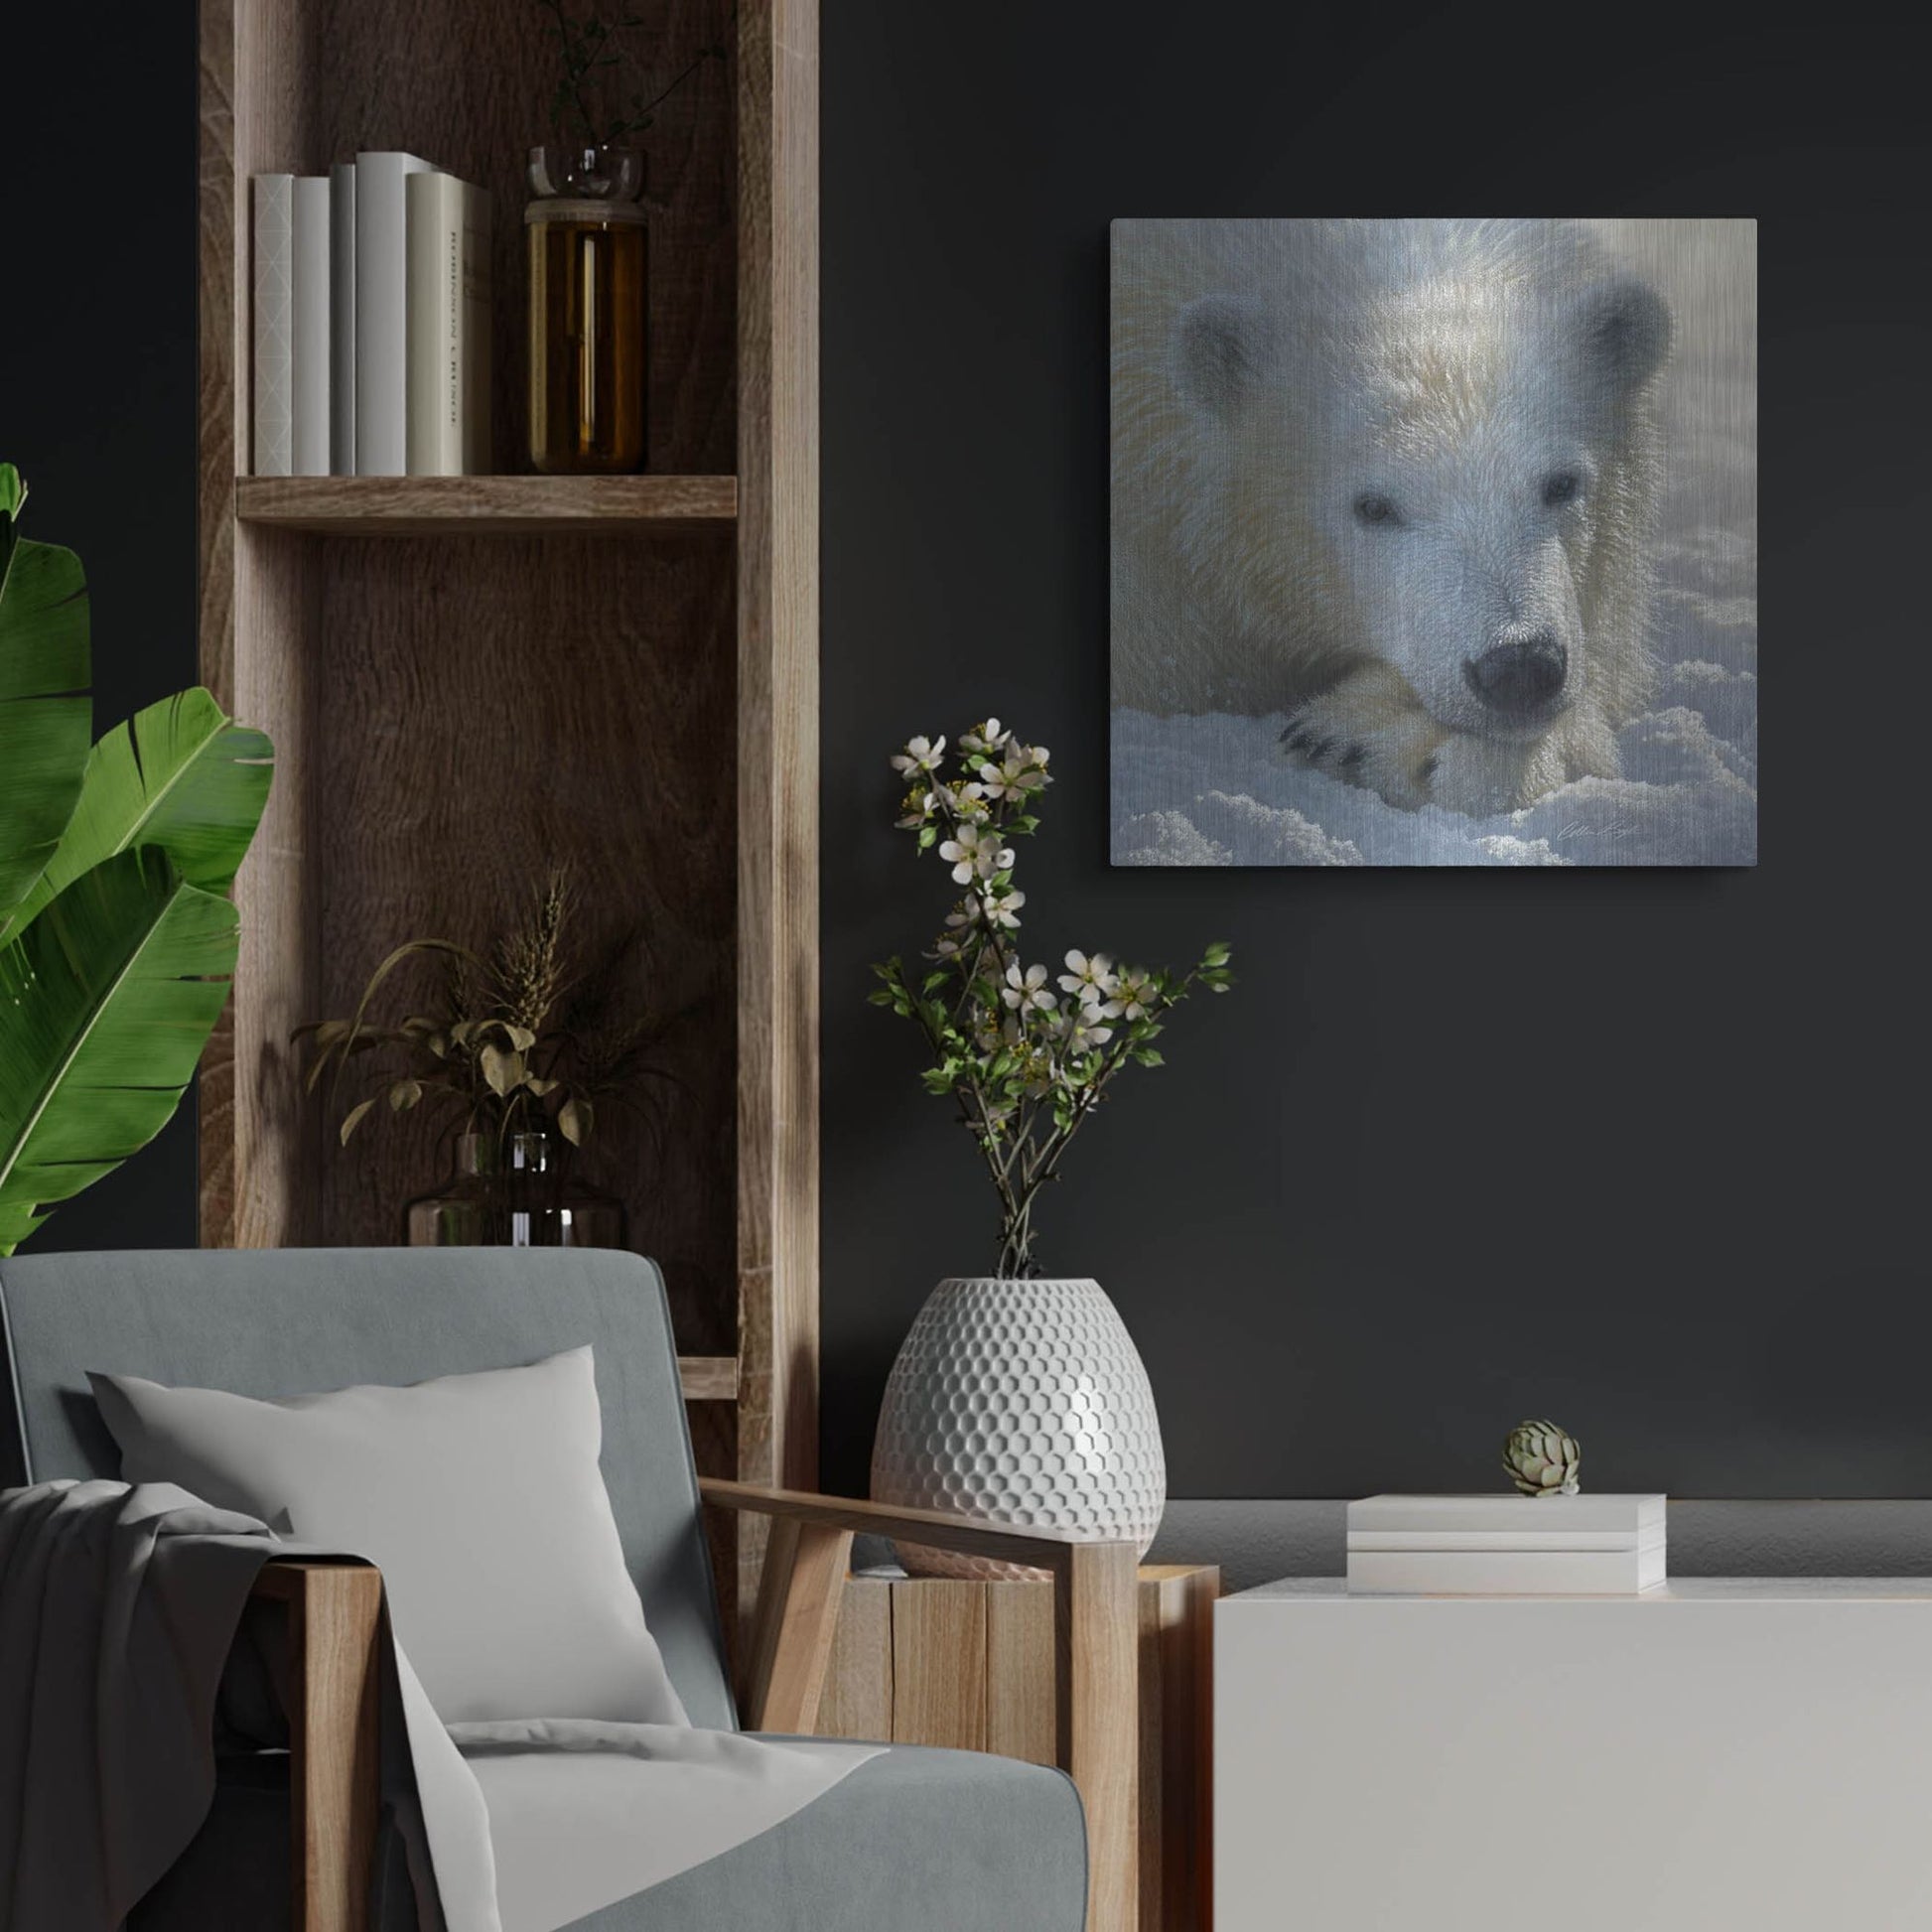 Luxe Metal Art 'Polar Bear Cub' by Collin Bogle, Metal Wall Art,24x24